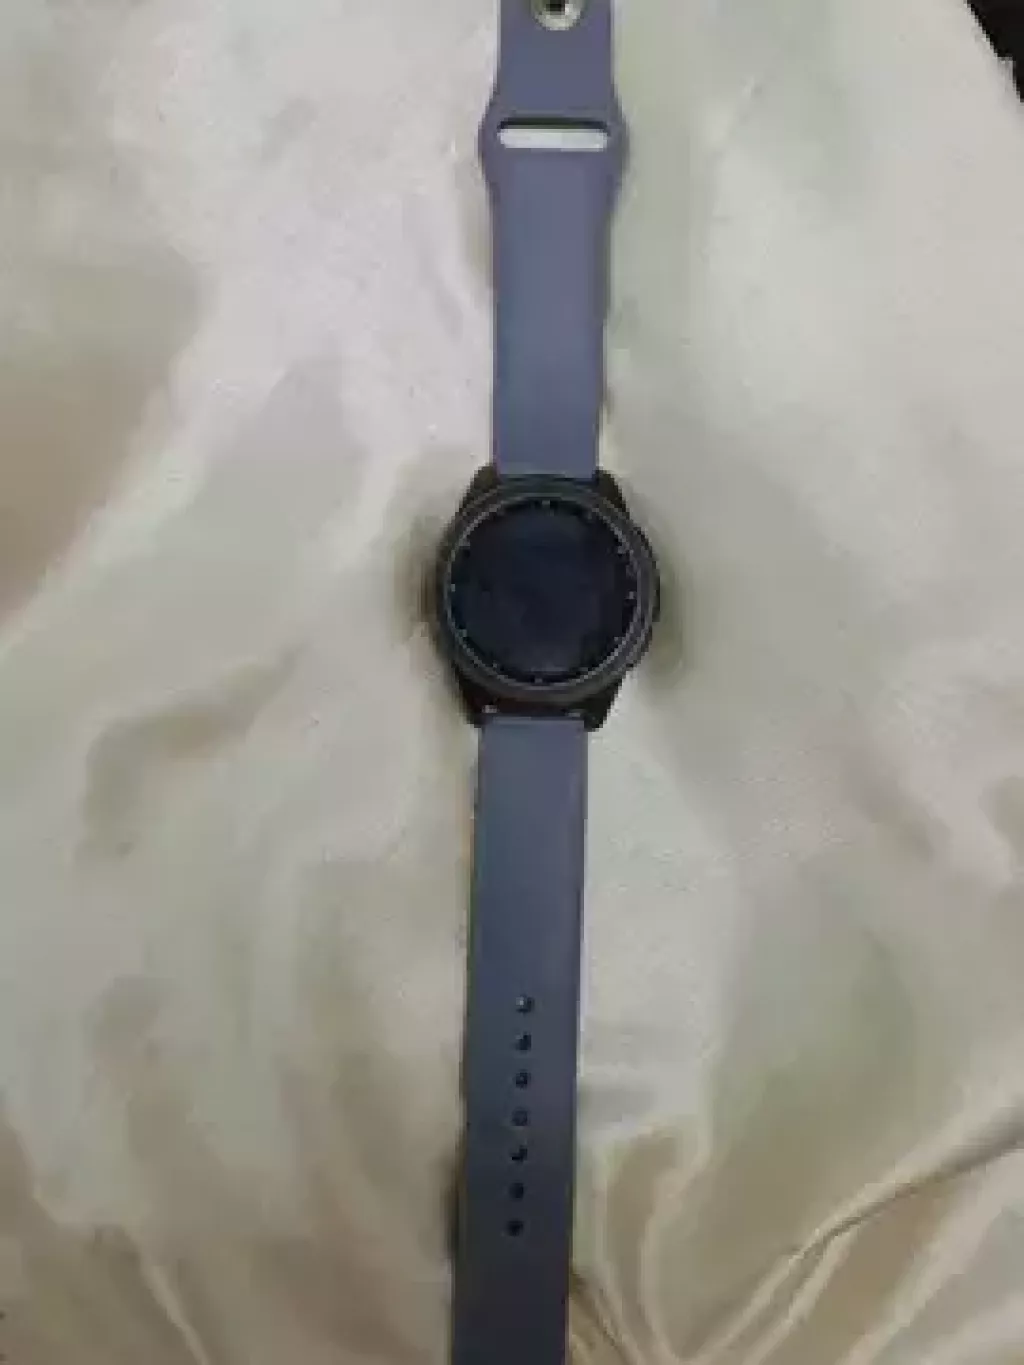 Купить б/у Часы Samsung Galaxy Watch 42 mm Костанай 1014, лот 240905-0